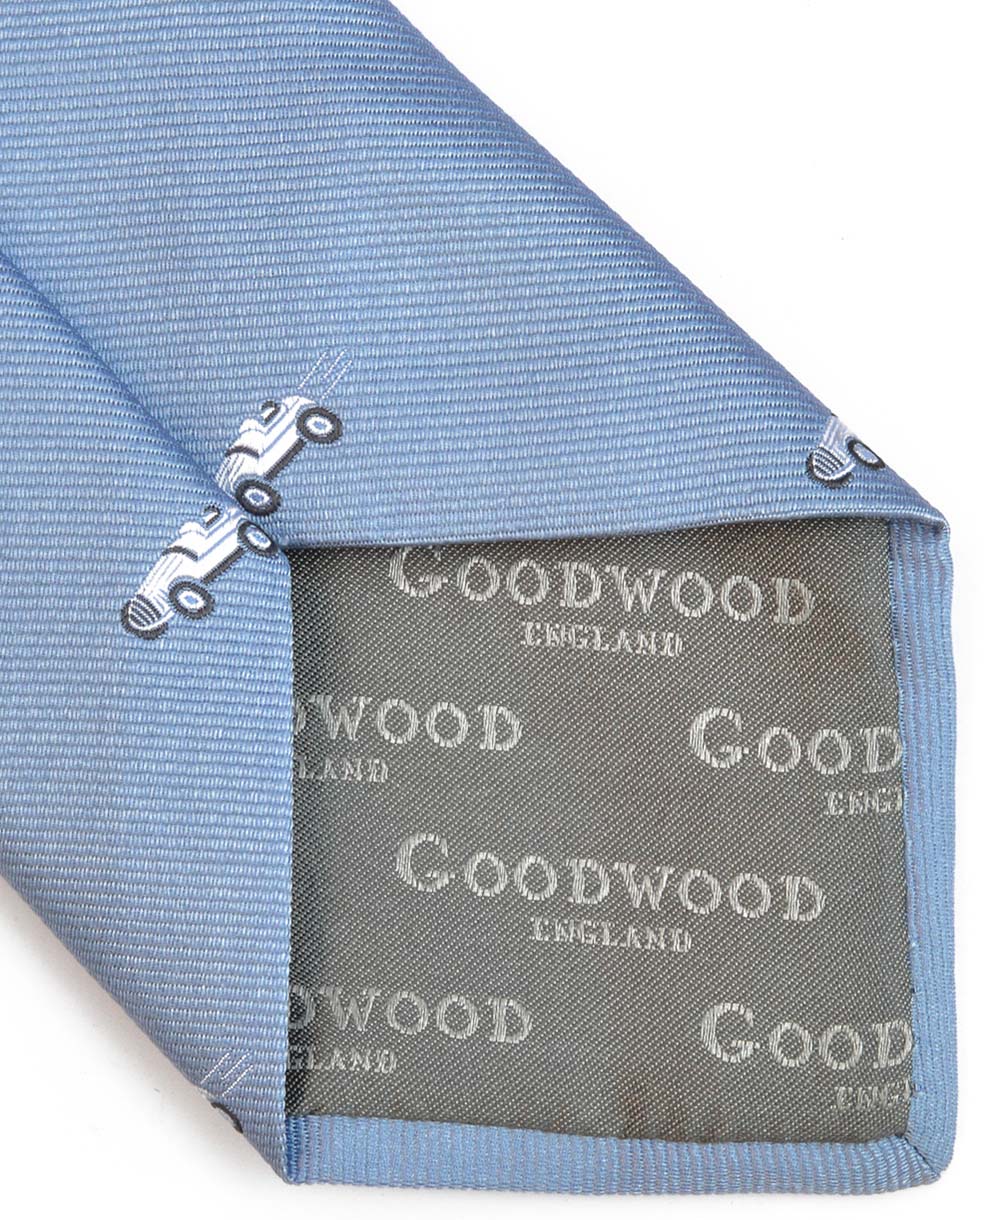 Goodwood Silk Cartoon Blue White Car Tie Detail